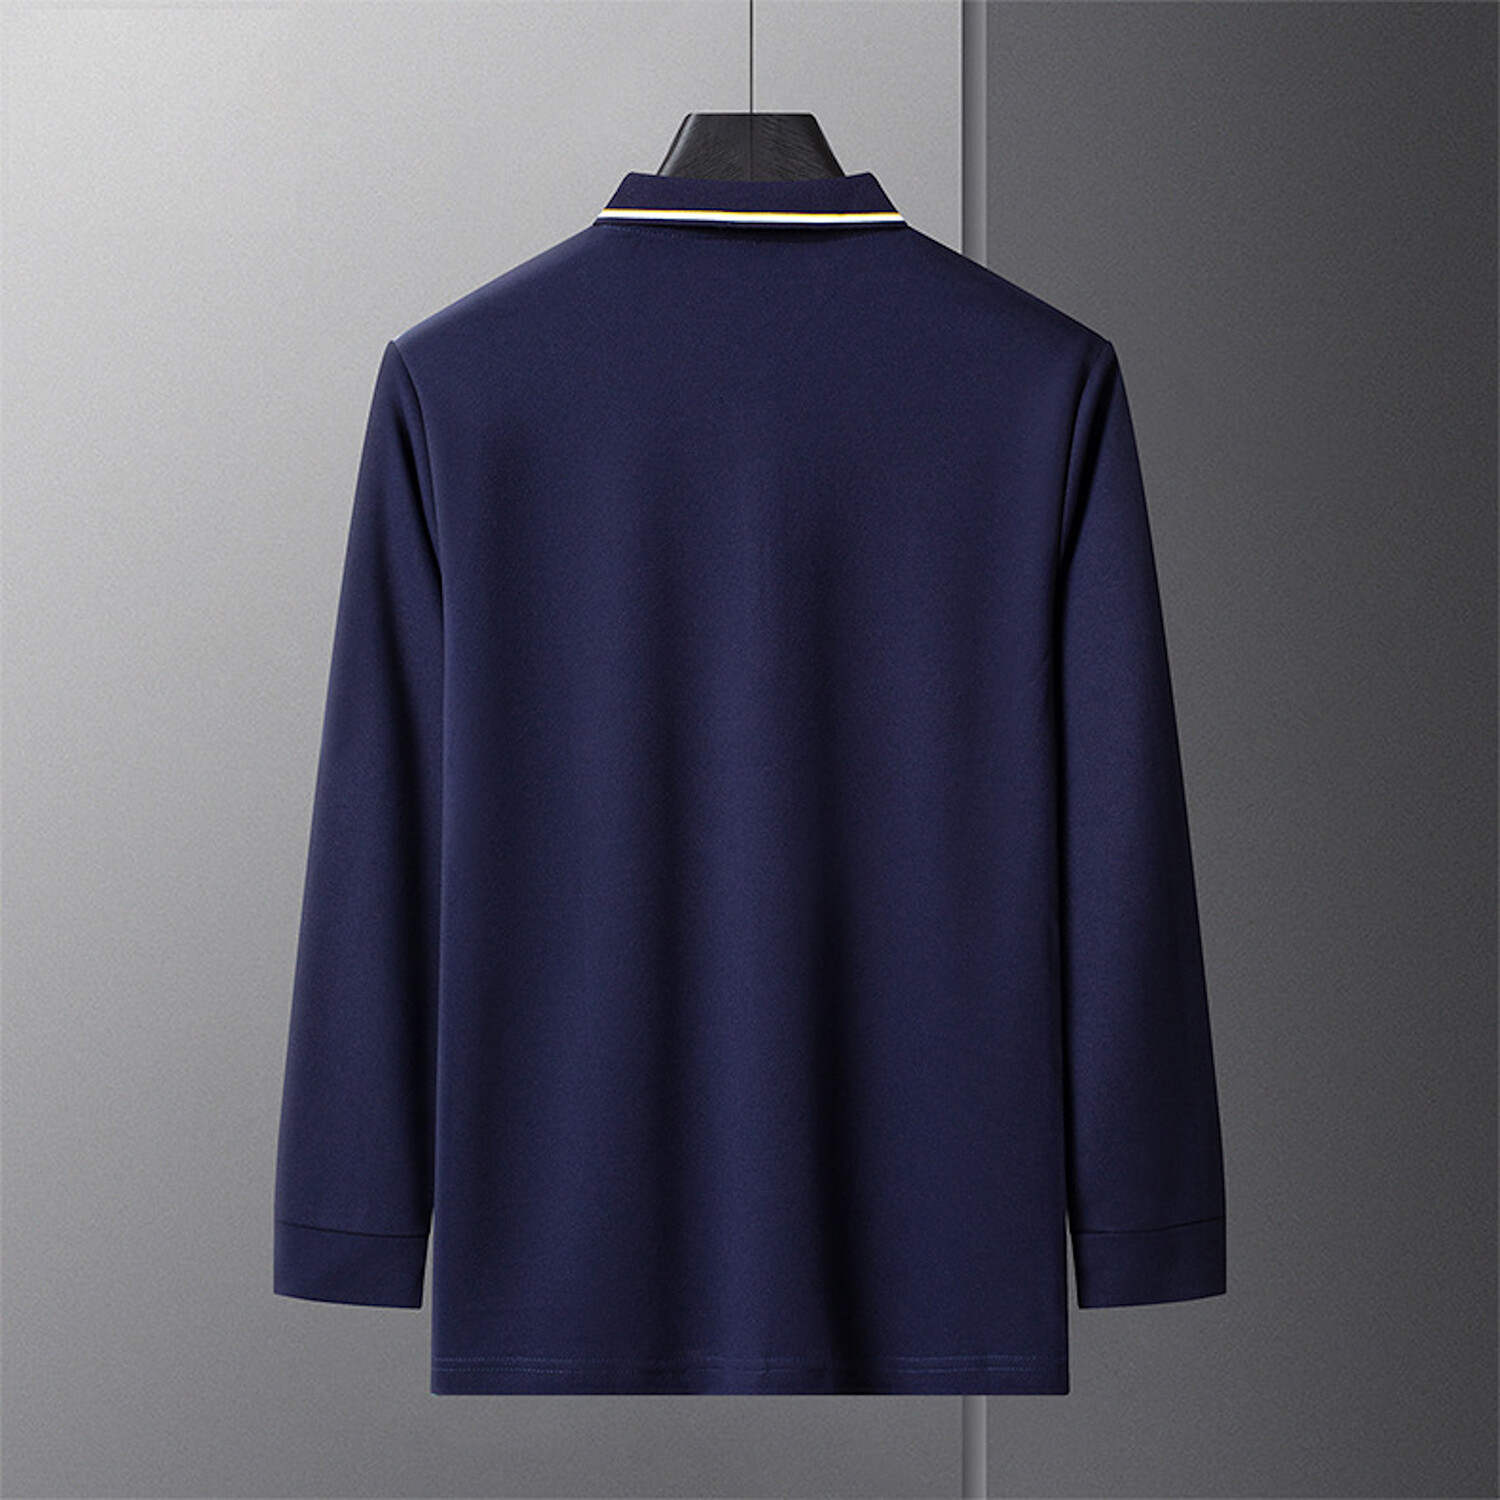 Polo Long Sleeve Shirt // Button closure // Blue Navy + White Line ...